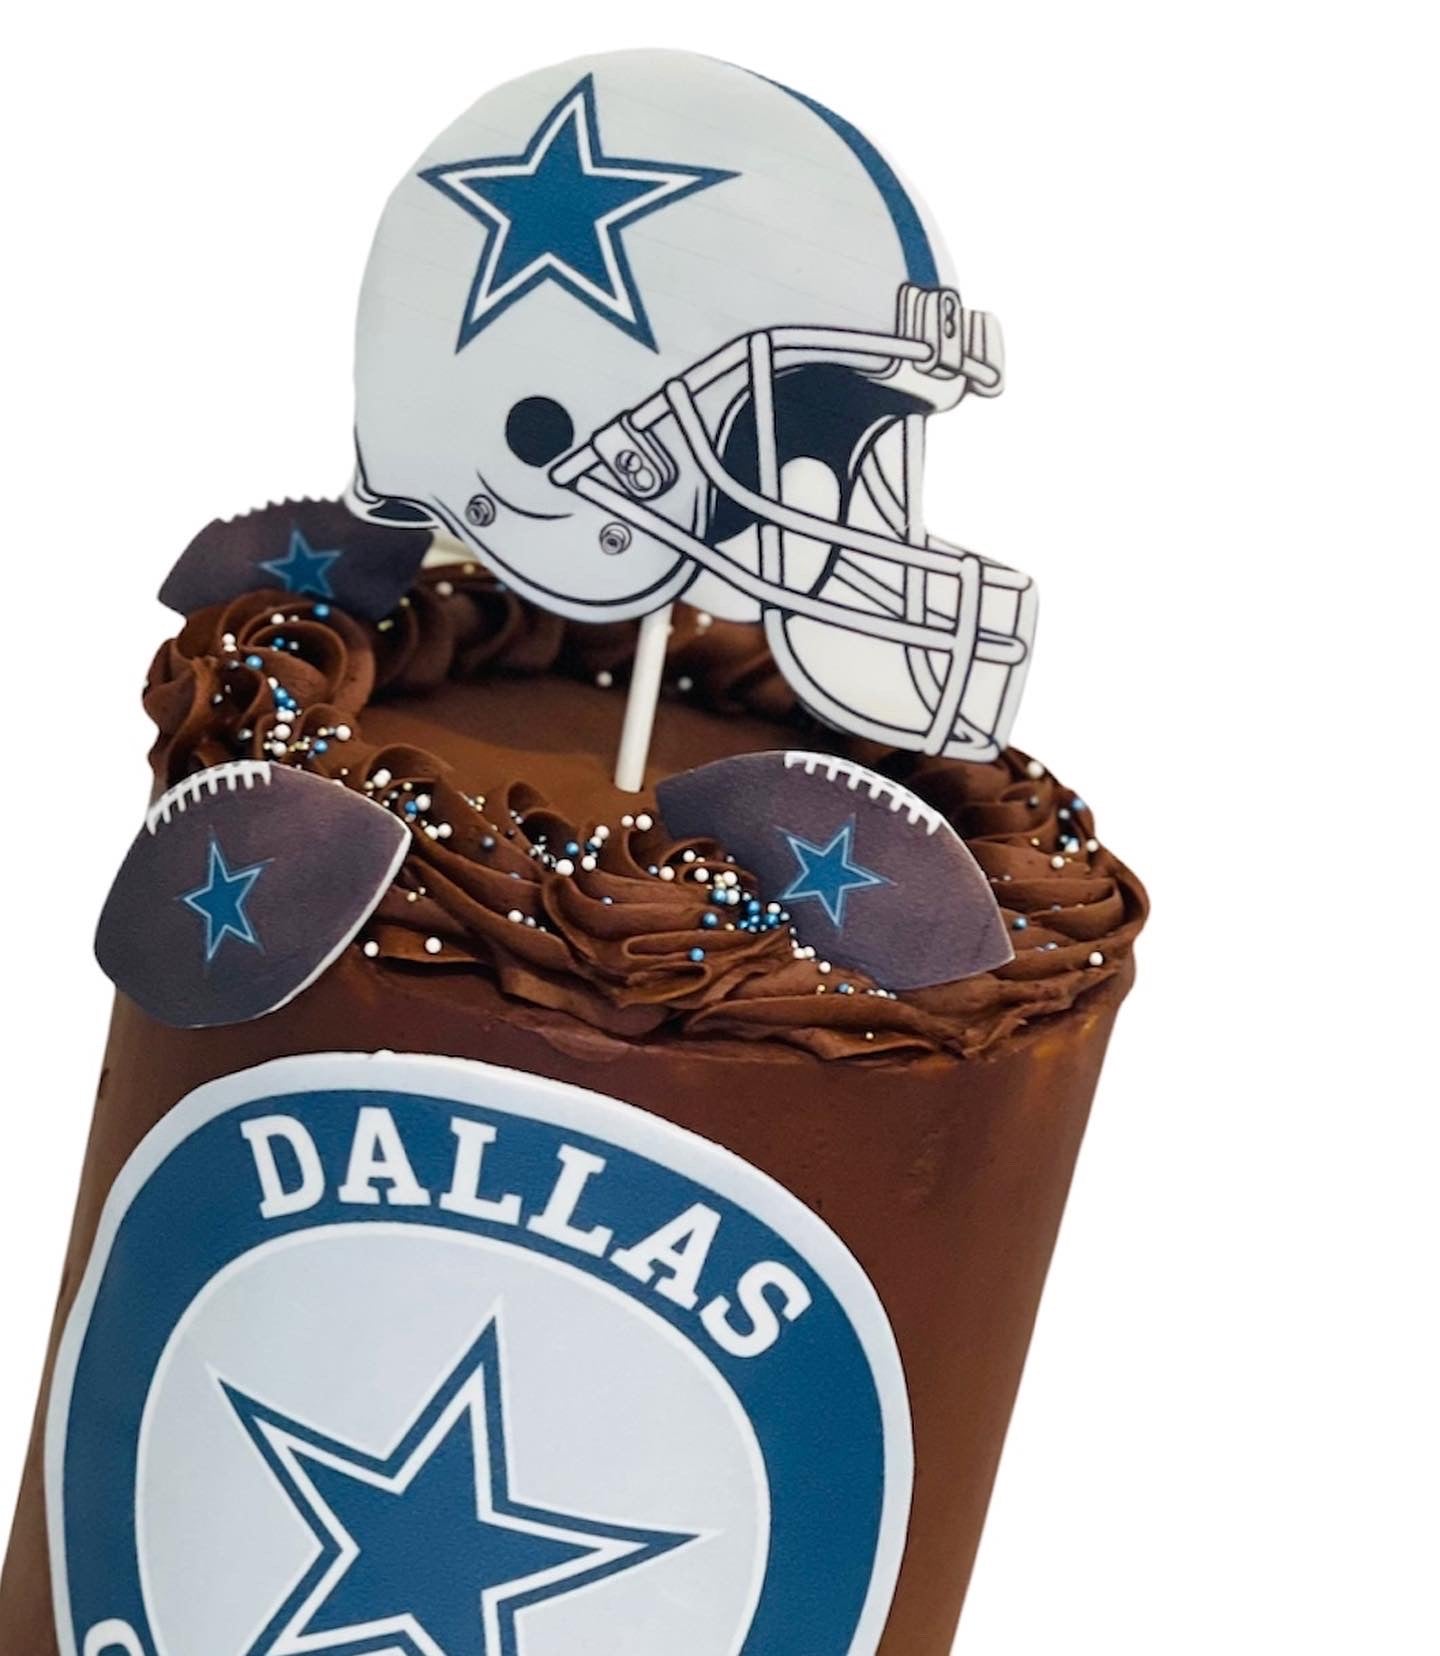 Austin Wedding Cakes | Dallas cowboys birthday, Dallas cowboys fans, Dallas  cowboys